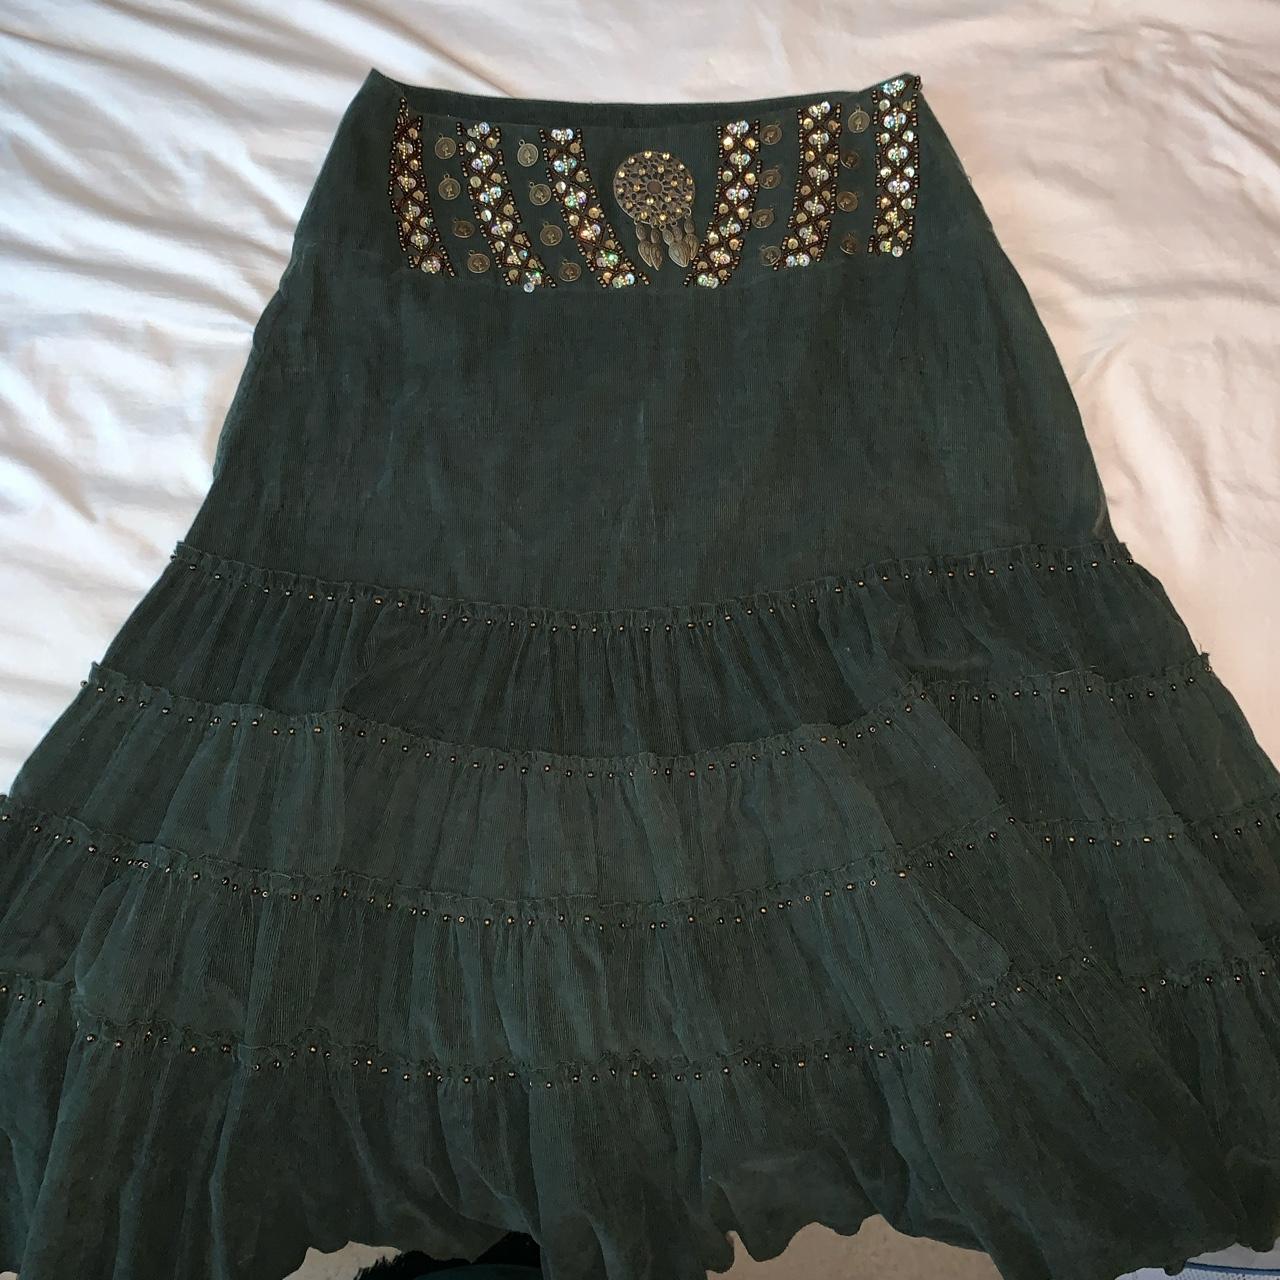 Blumarine Women's Gold and Green Skirt